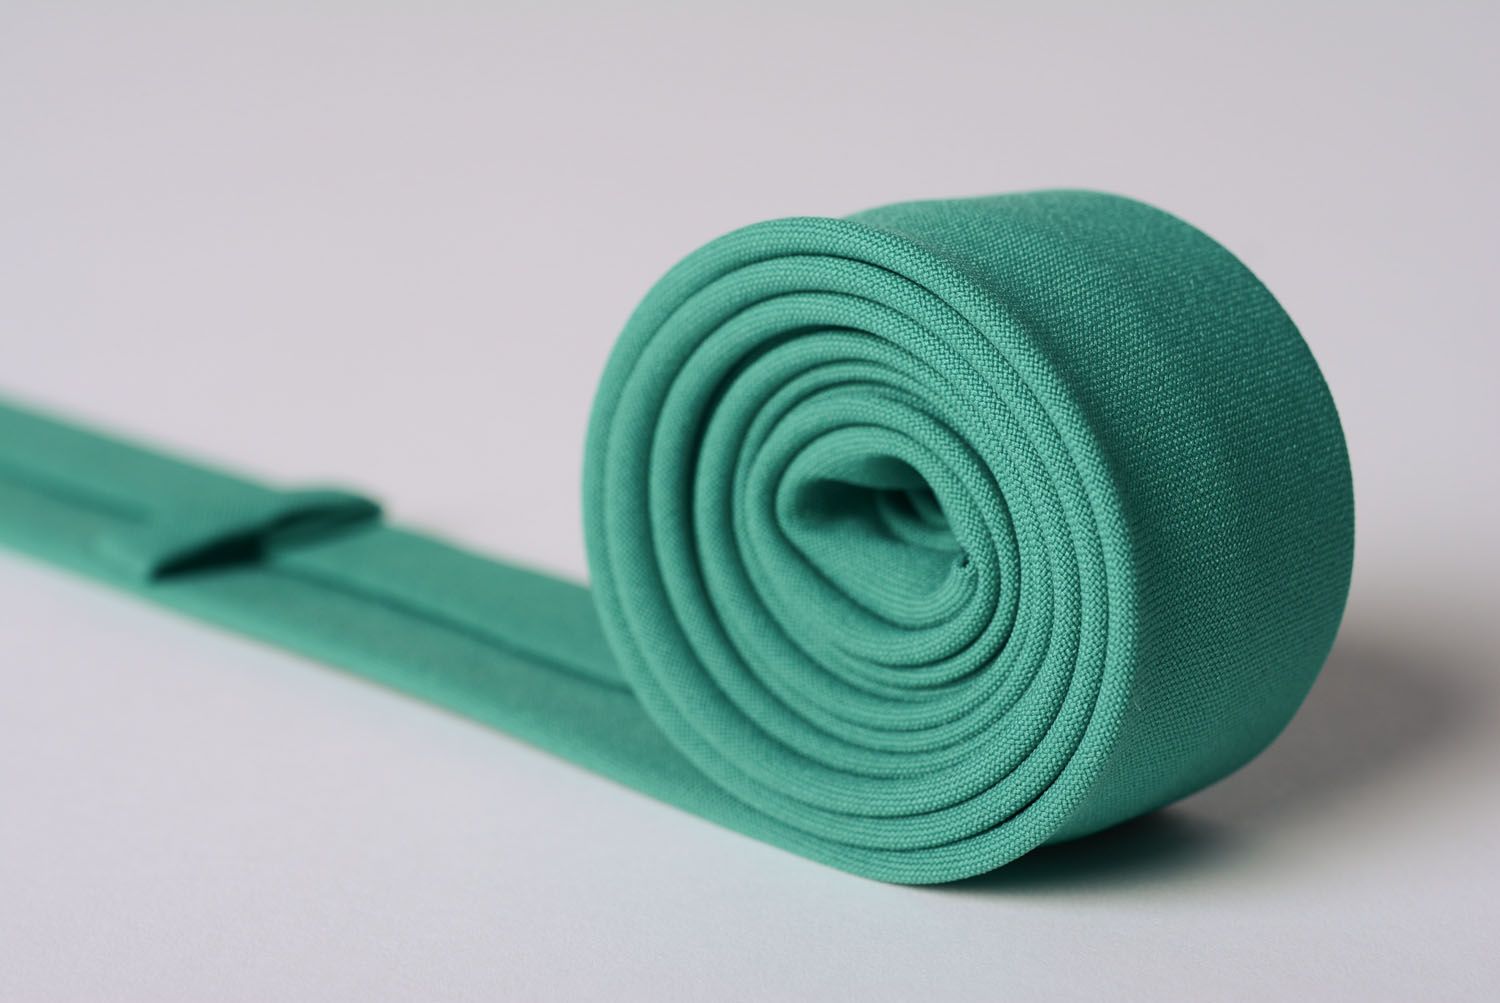 Cravate turquoise en gabardine faite main photo 3